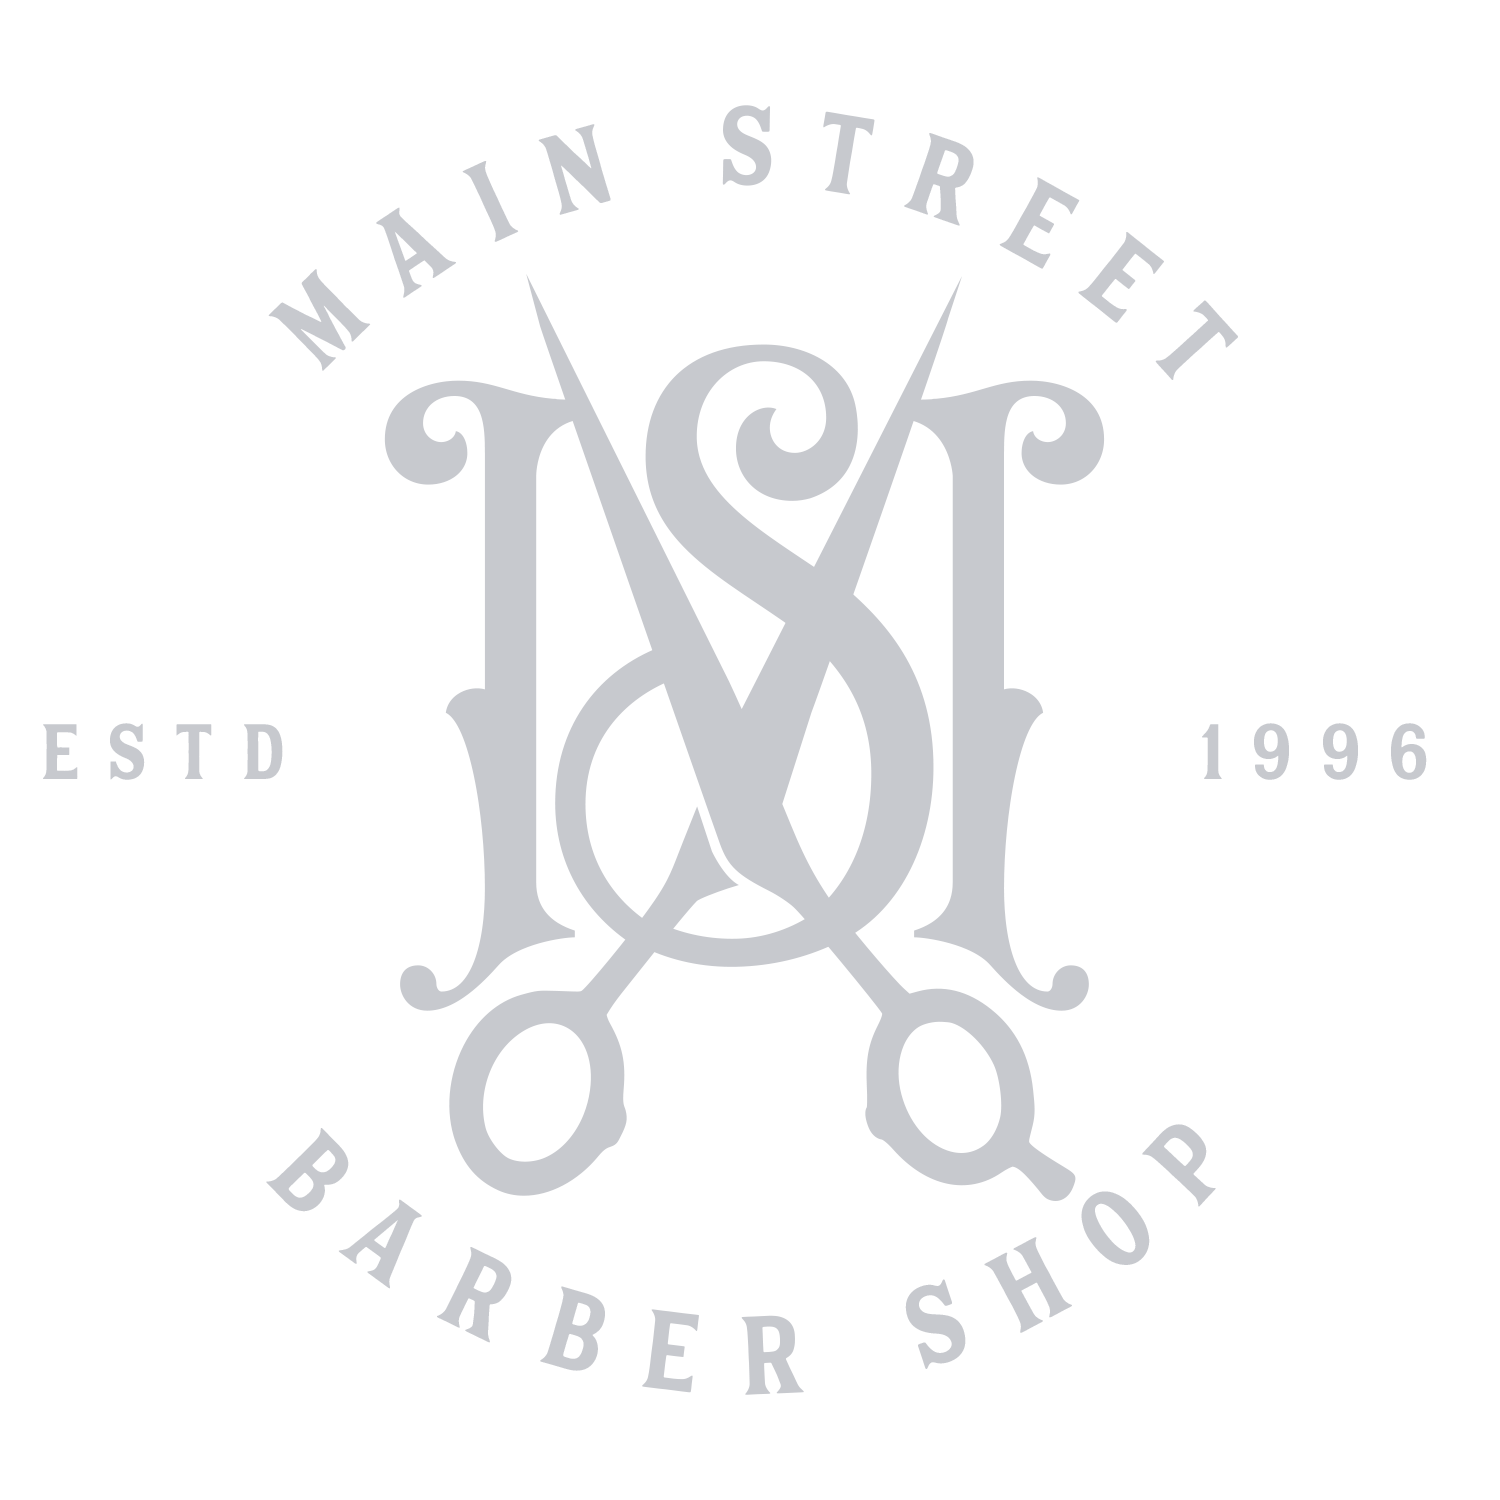 Main Street  Barber Shop